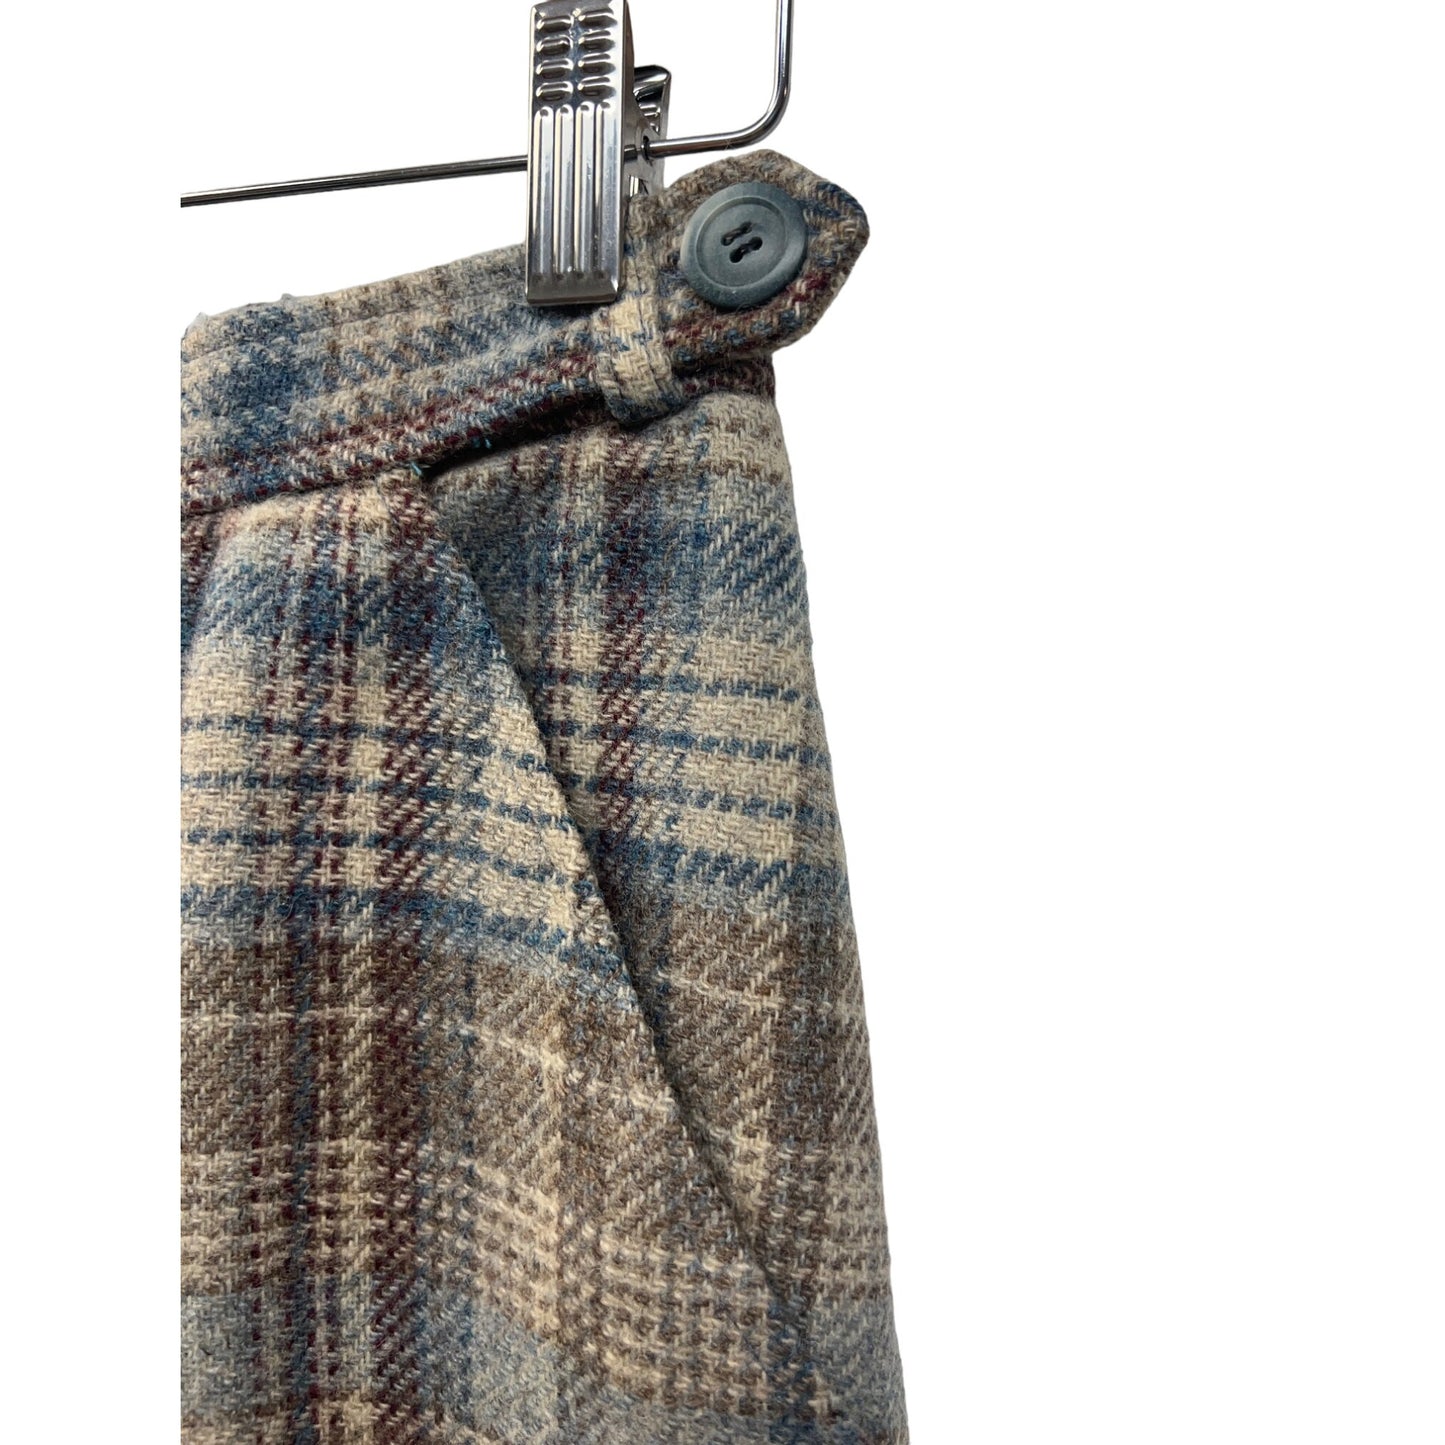 Austin Hill Talbots Vintage Plaid Wool A-Line Midi Skirt